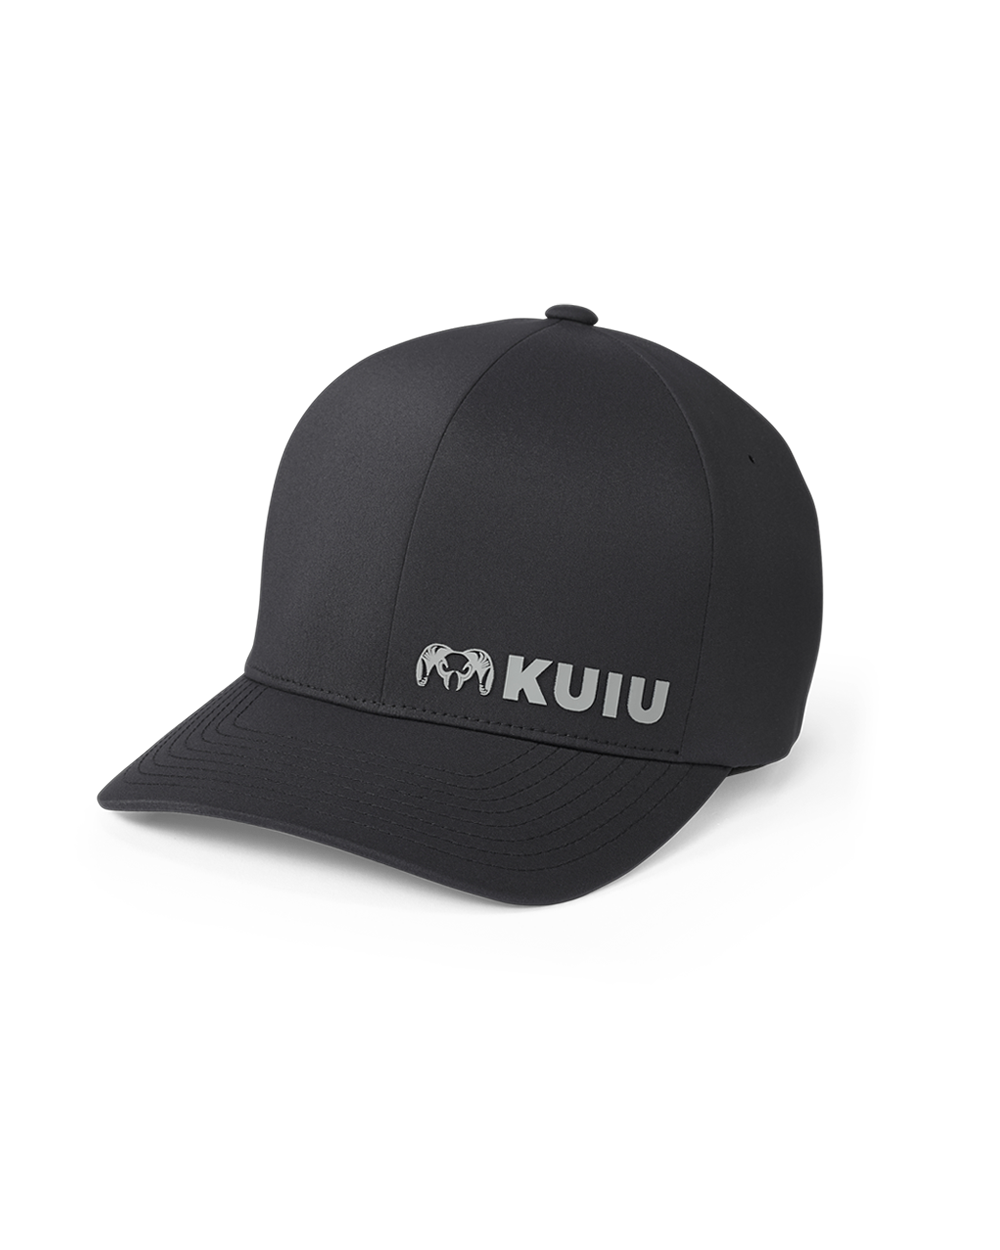 KUIU Flexfit Delta Cap in Black | Size Large/XL